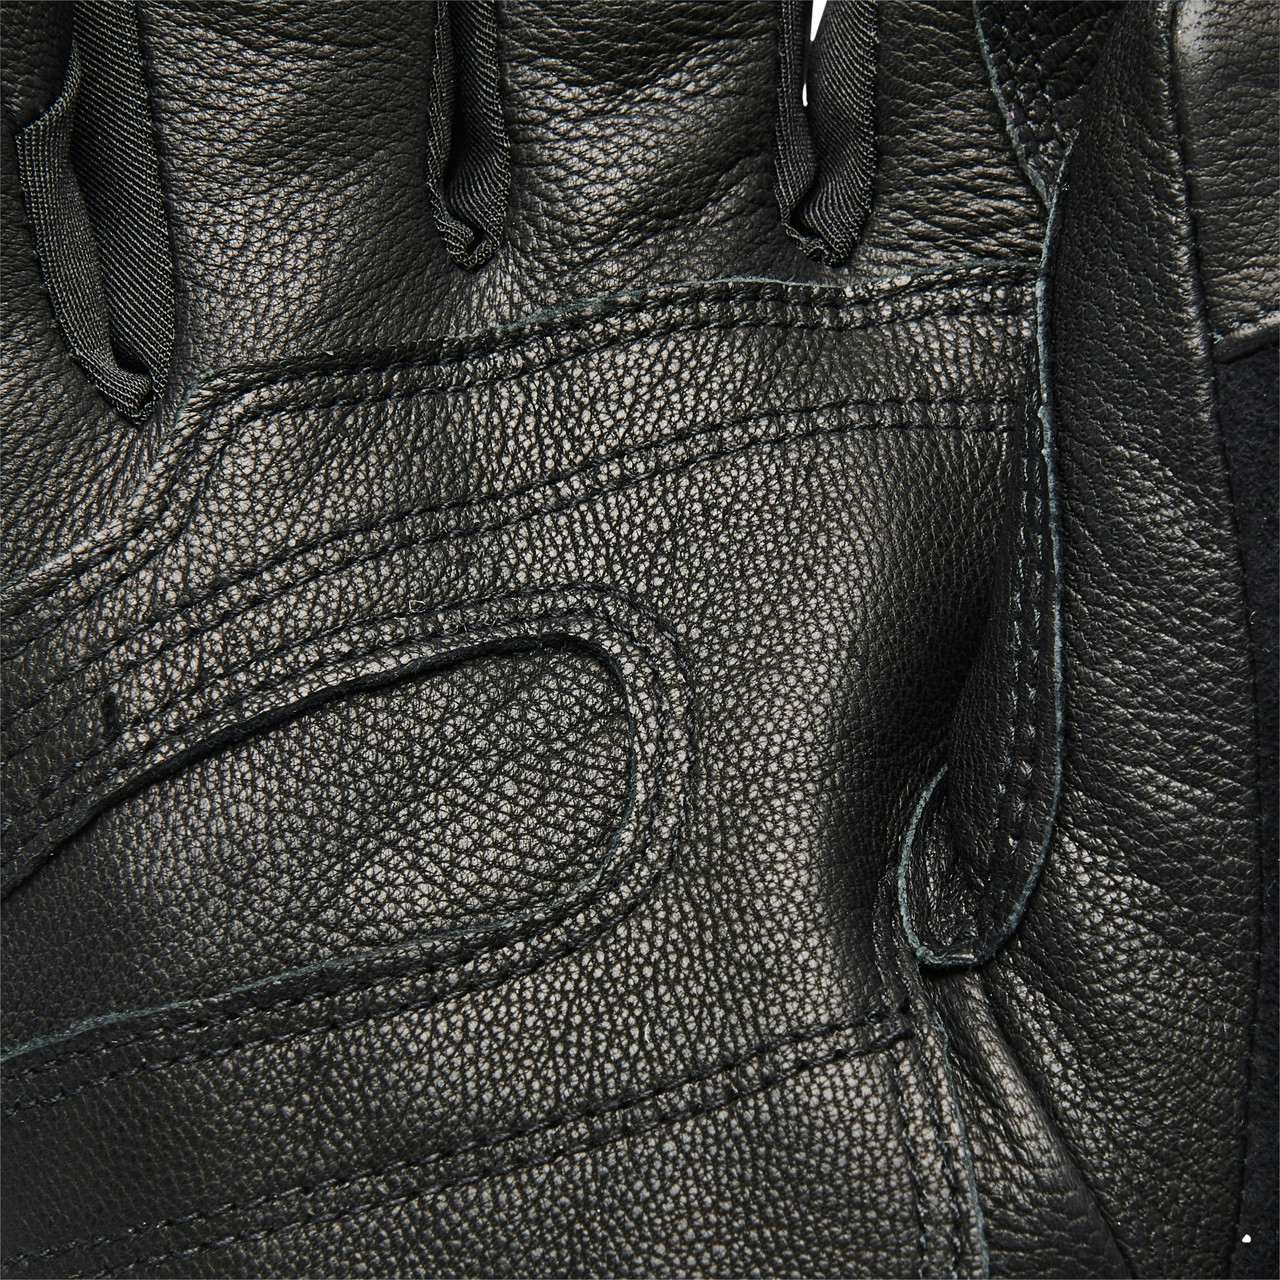 Guide Gloves Black